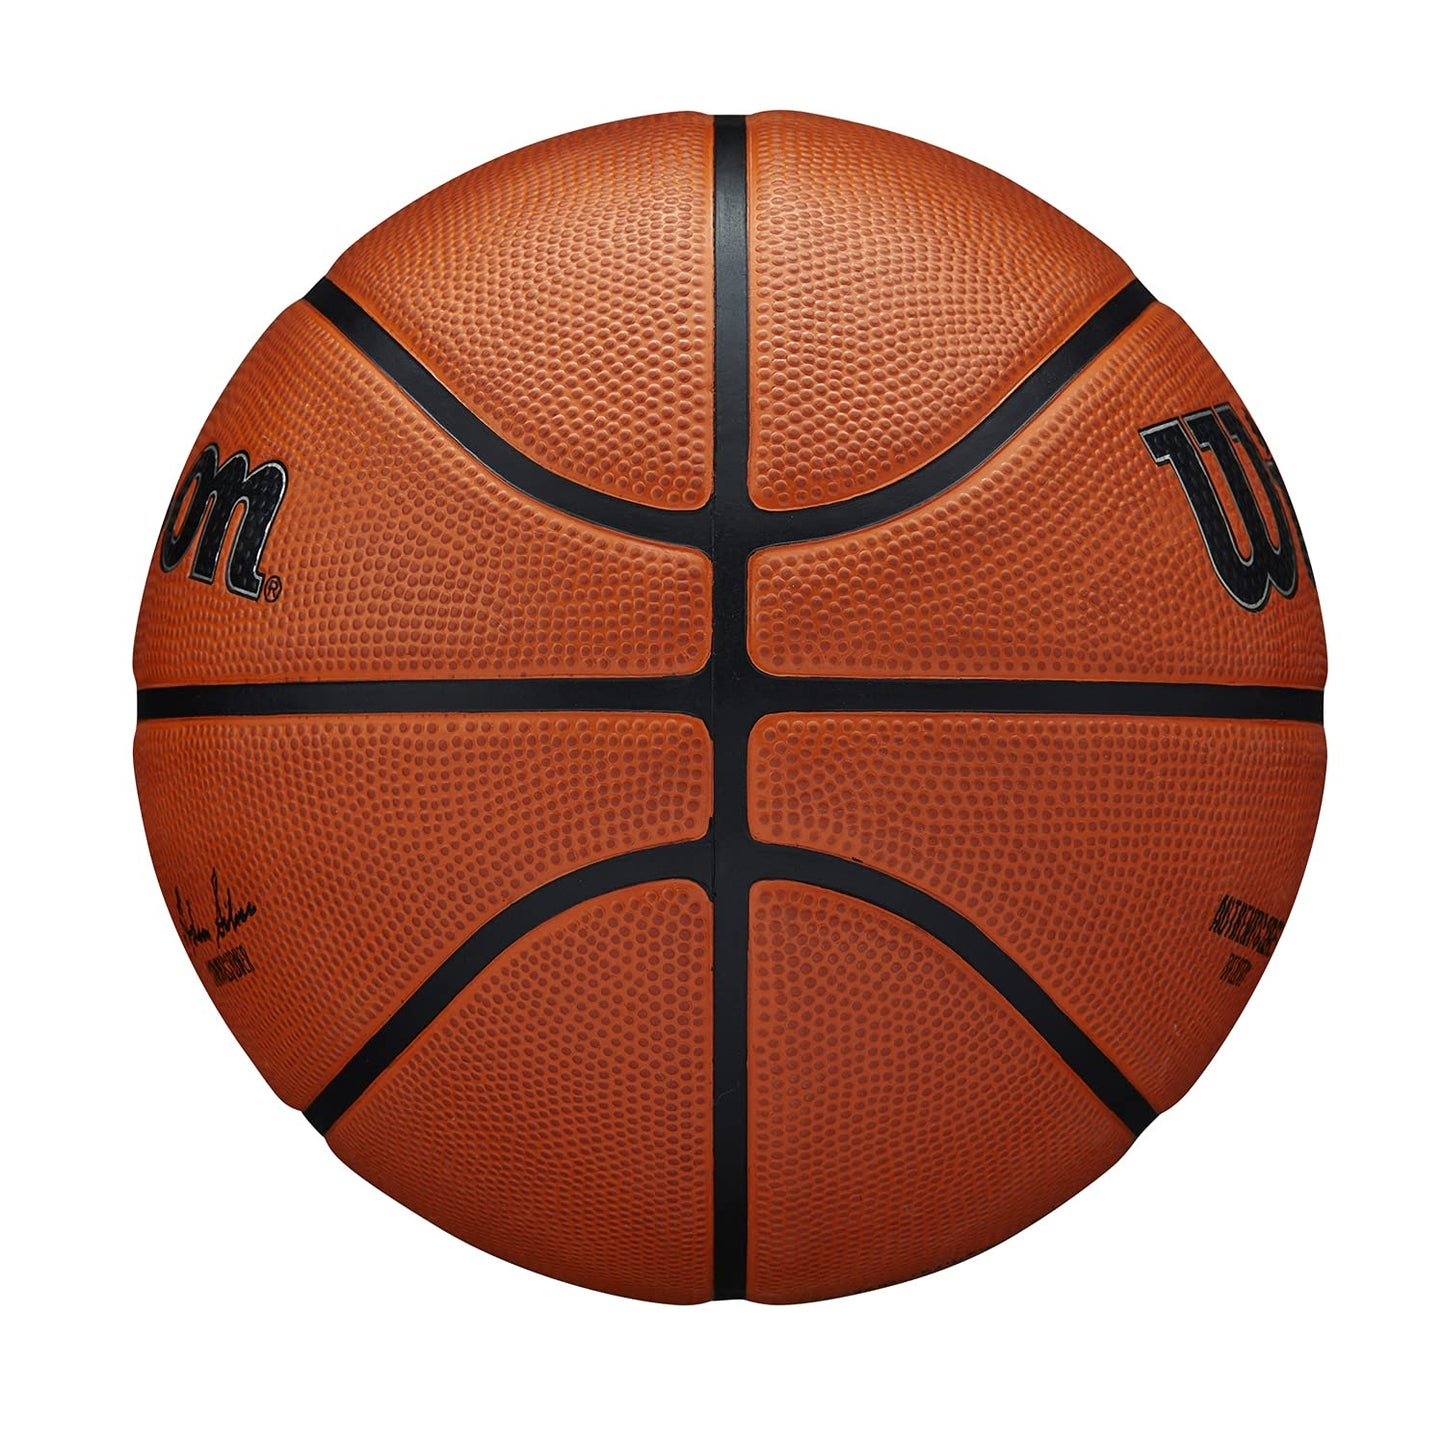 Wilson WTB7300XB07 NBA Authentic Series Outdoor Basketball, Size 7 (Brown) - Best Price online Prokicksports.com